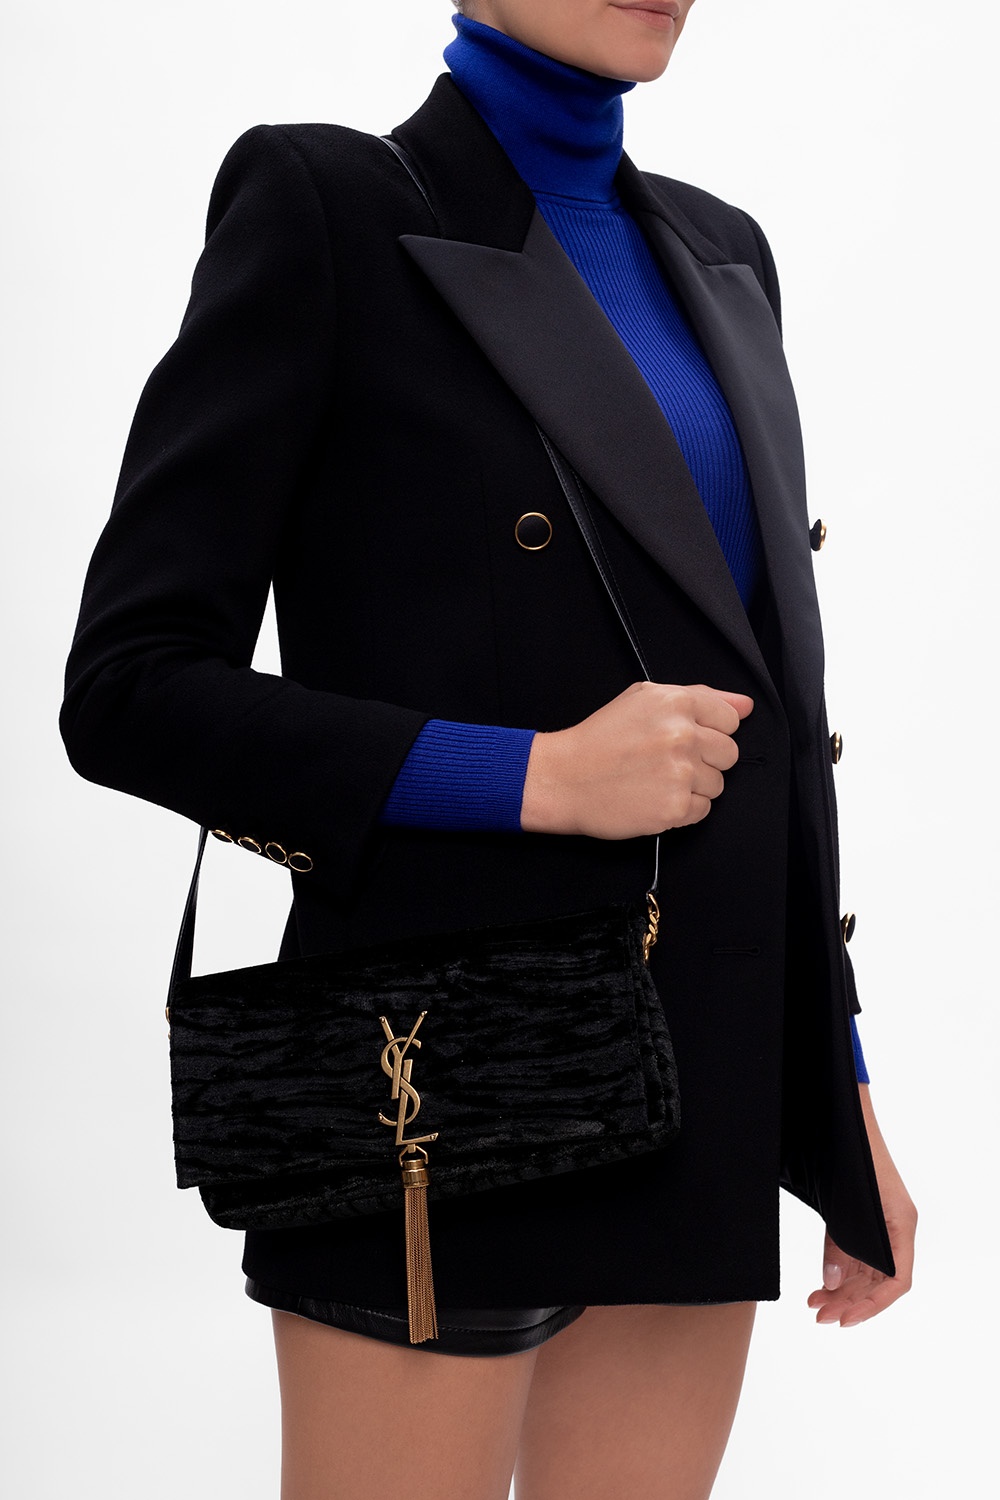 Yves Saint Laurent Kate 99 Chevron Leather Shoulder Bag